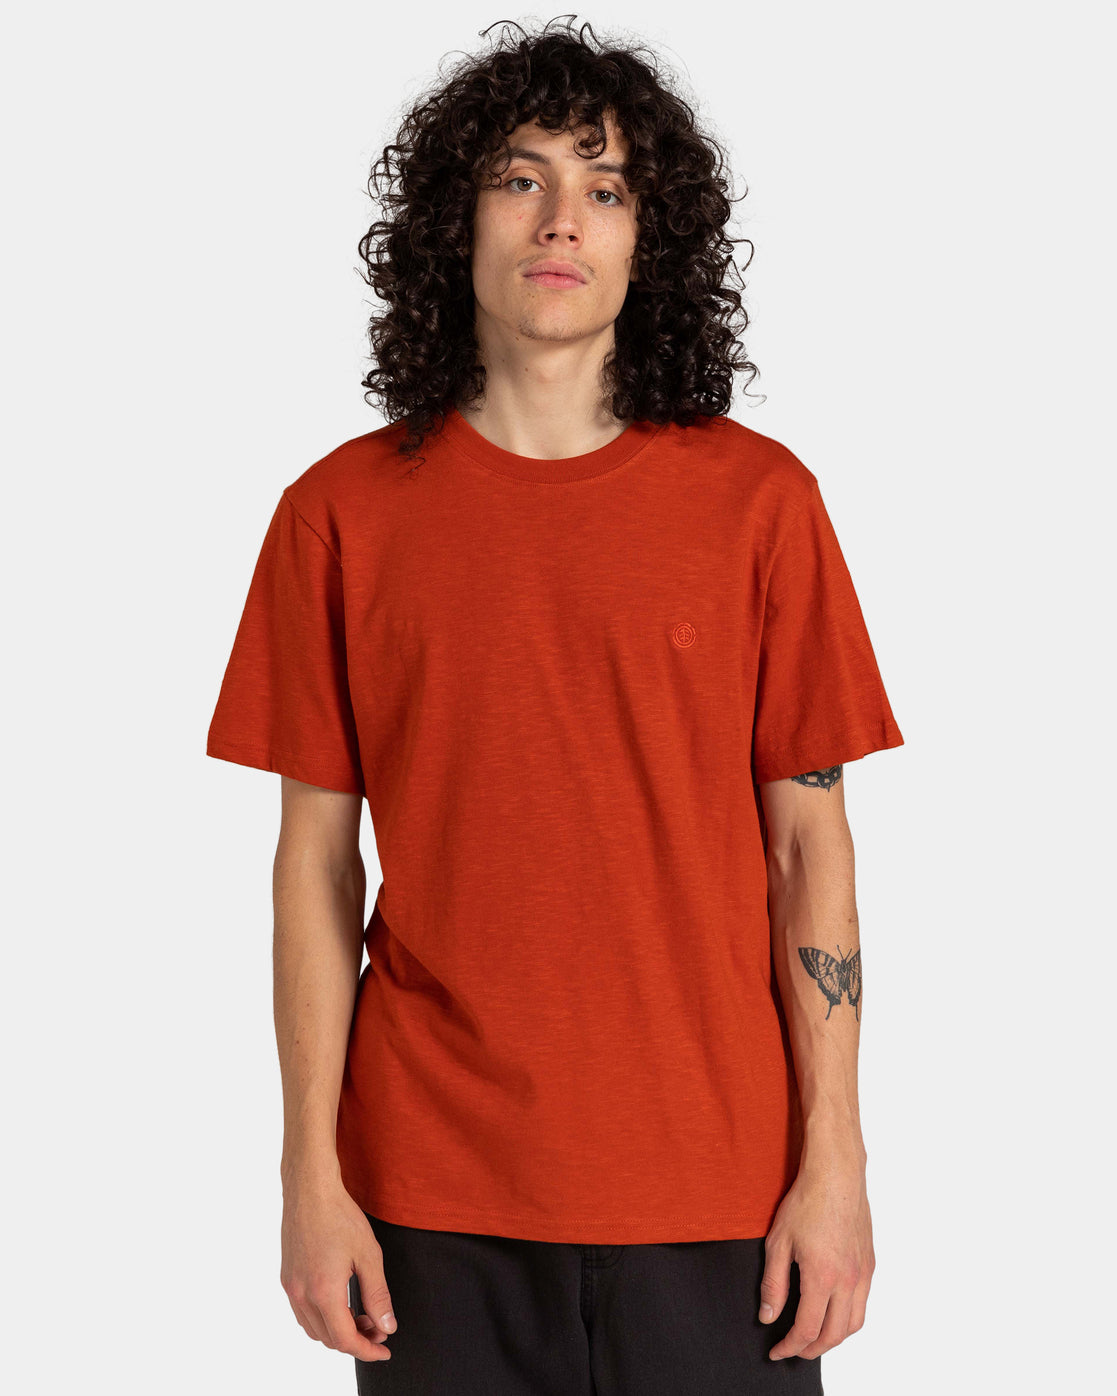 Camiseta Element Skateboards Crail Picante